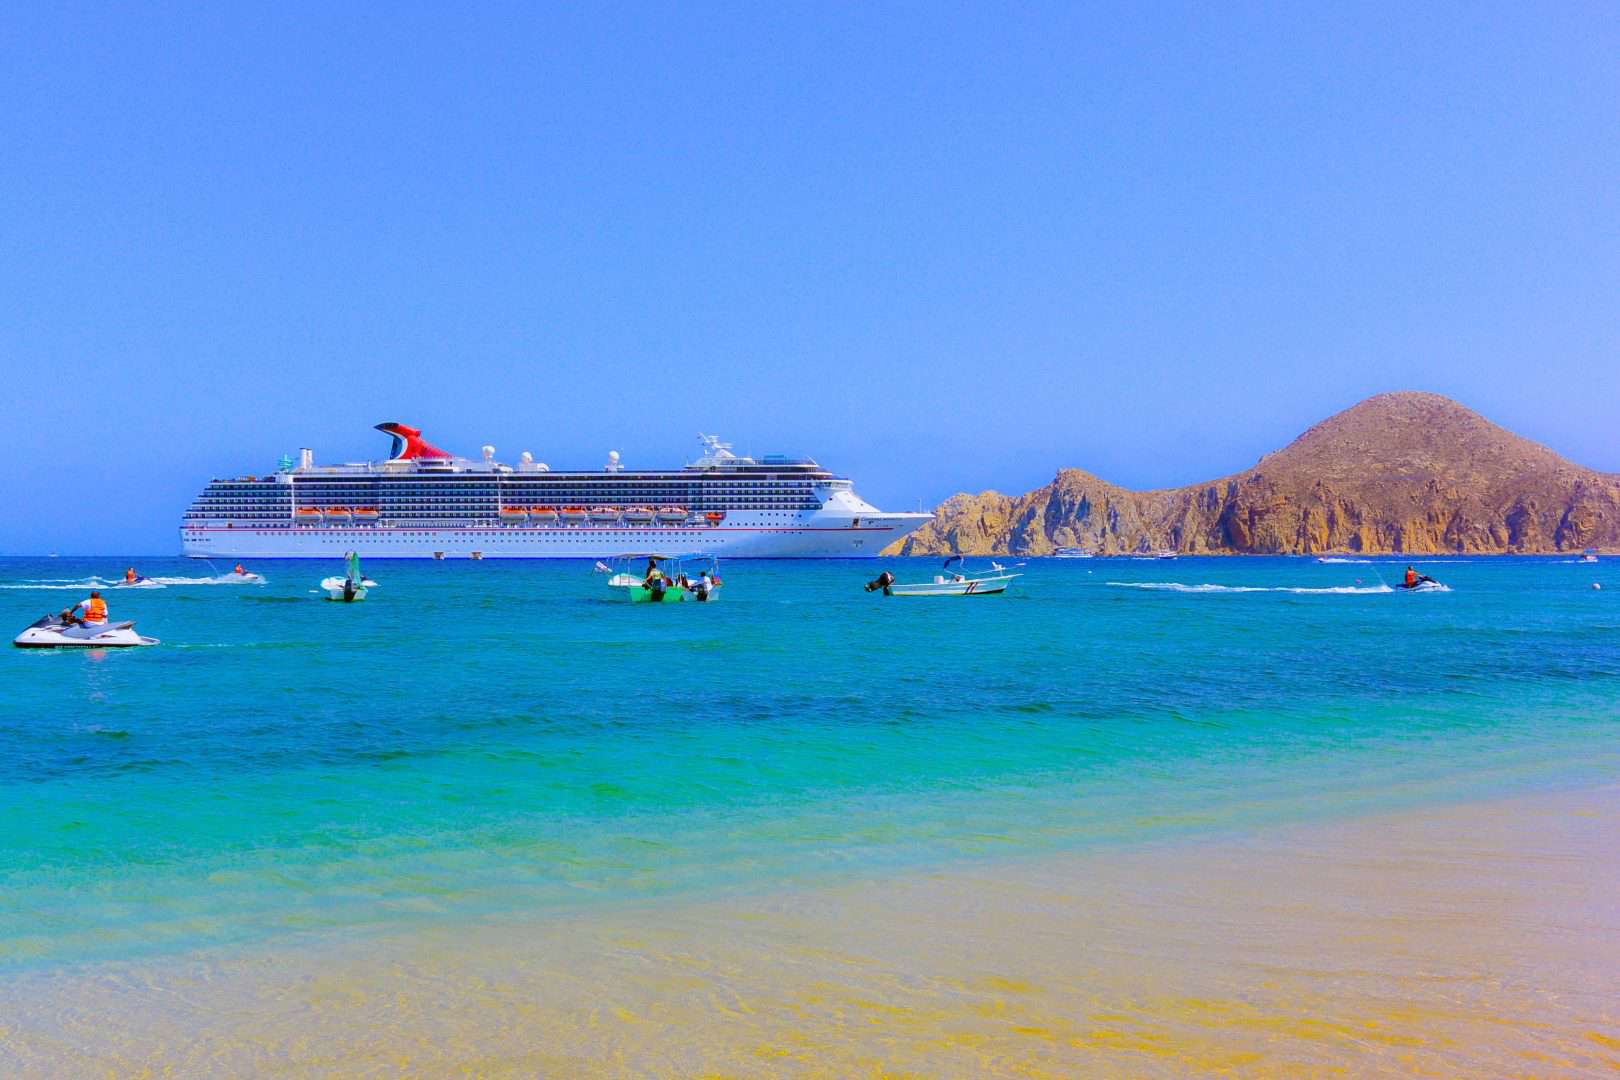 Cabo San Lucas Cruise Ships visiting The Port Of Cabo Mexico